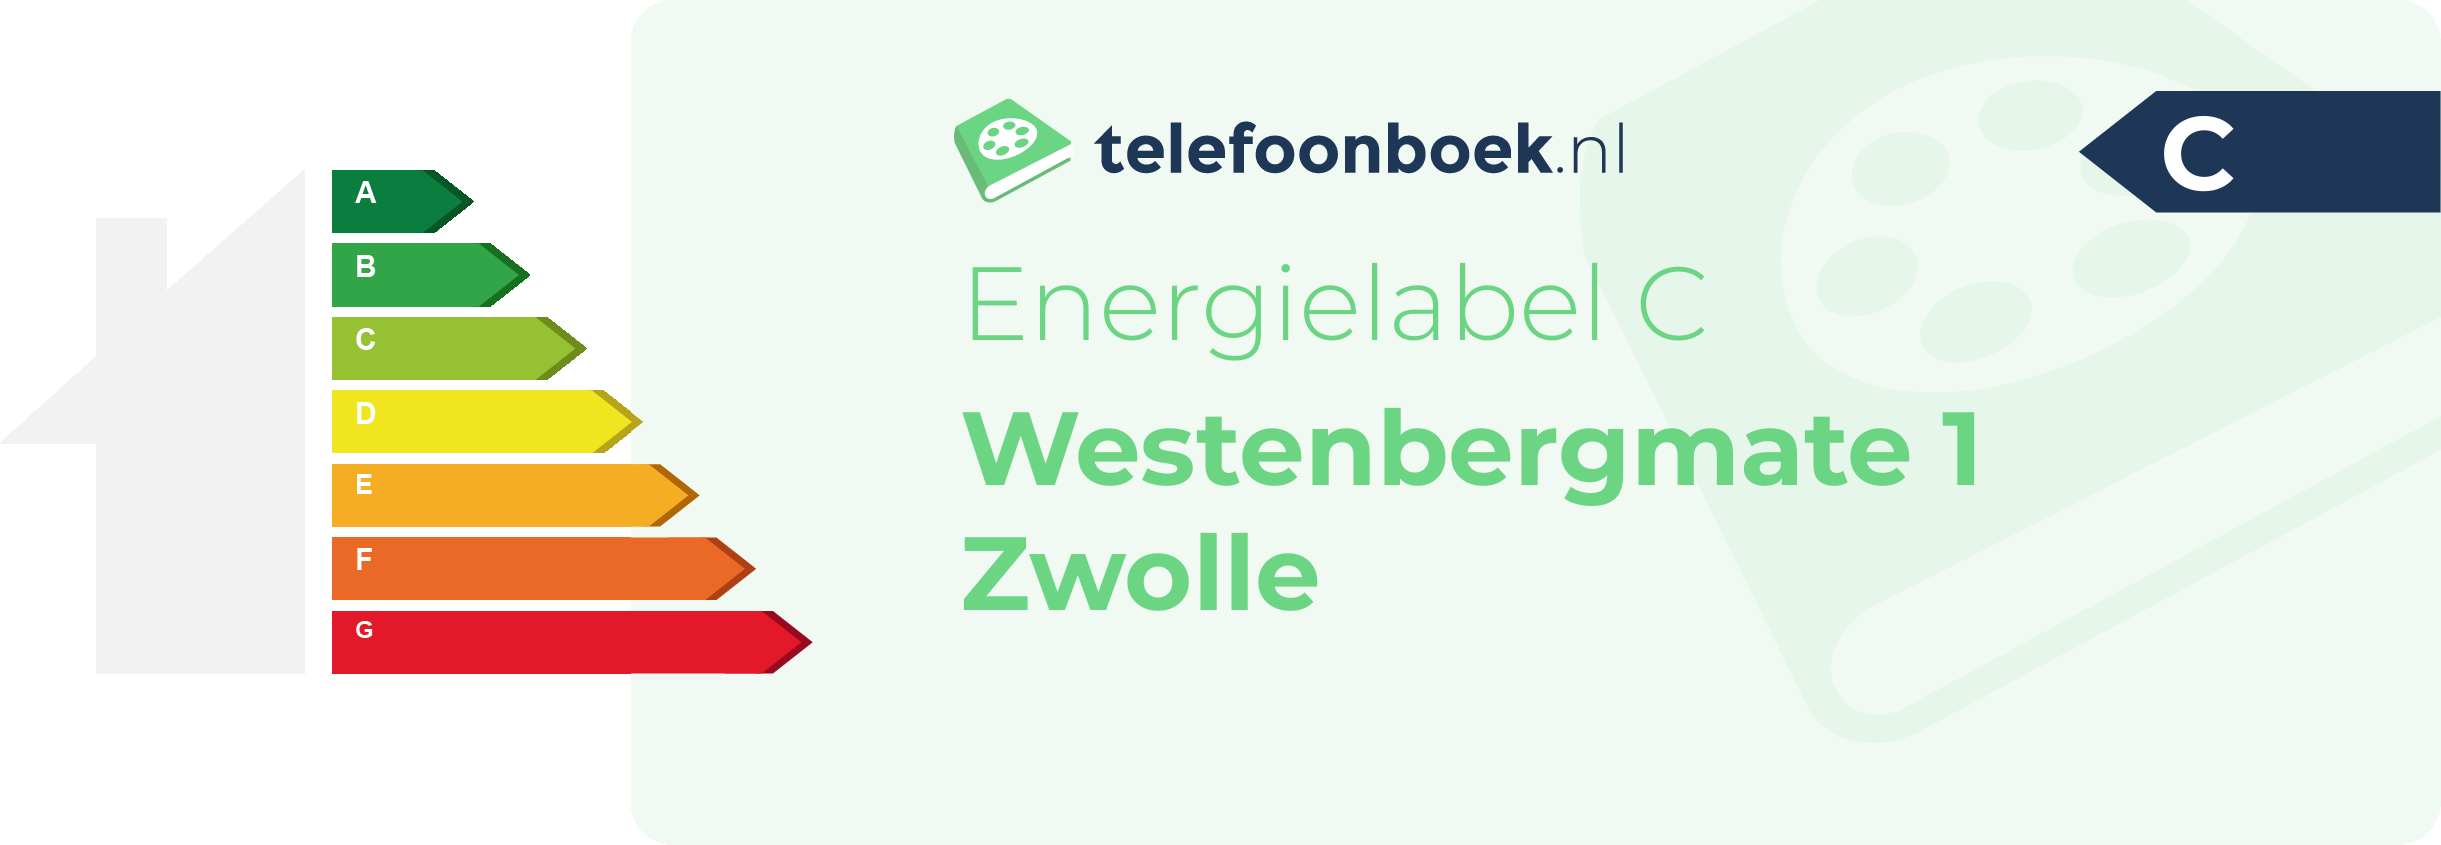 Energielabel Westenbergmate 1 Zwolle